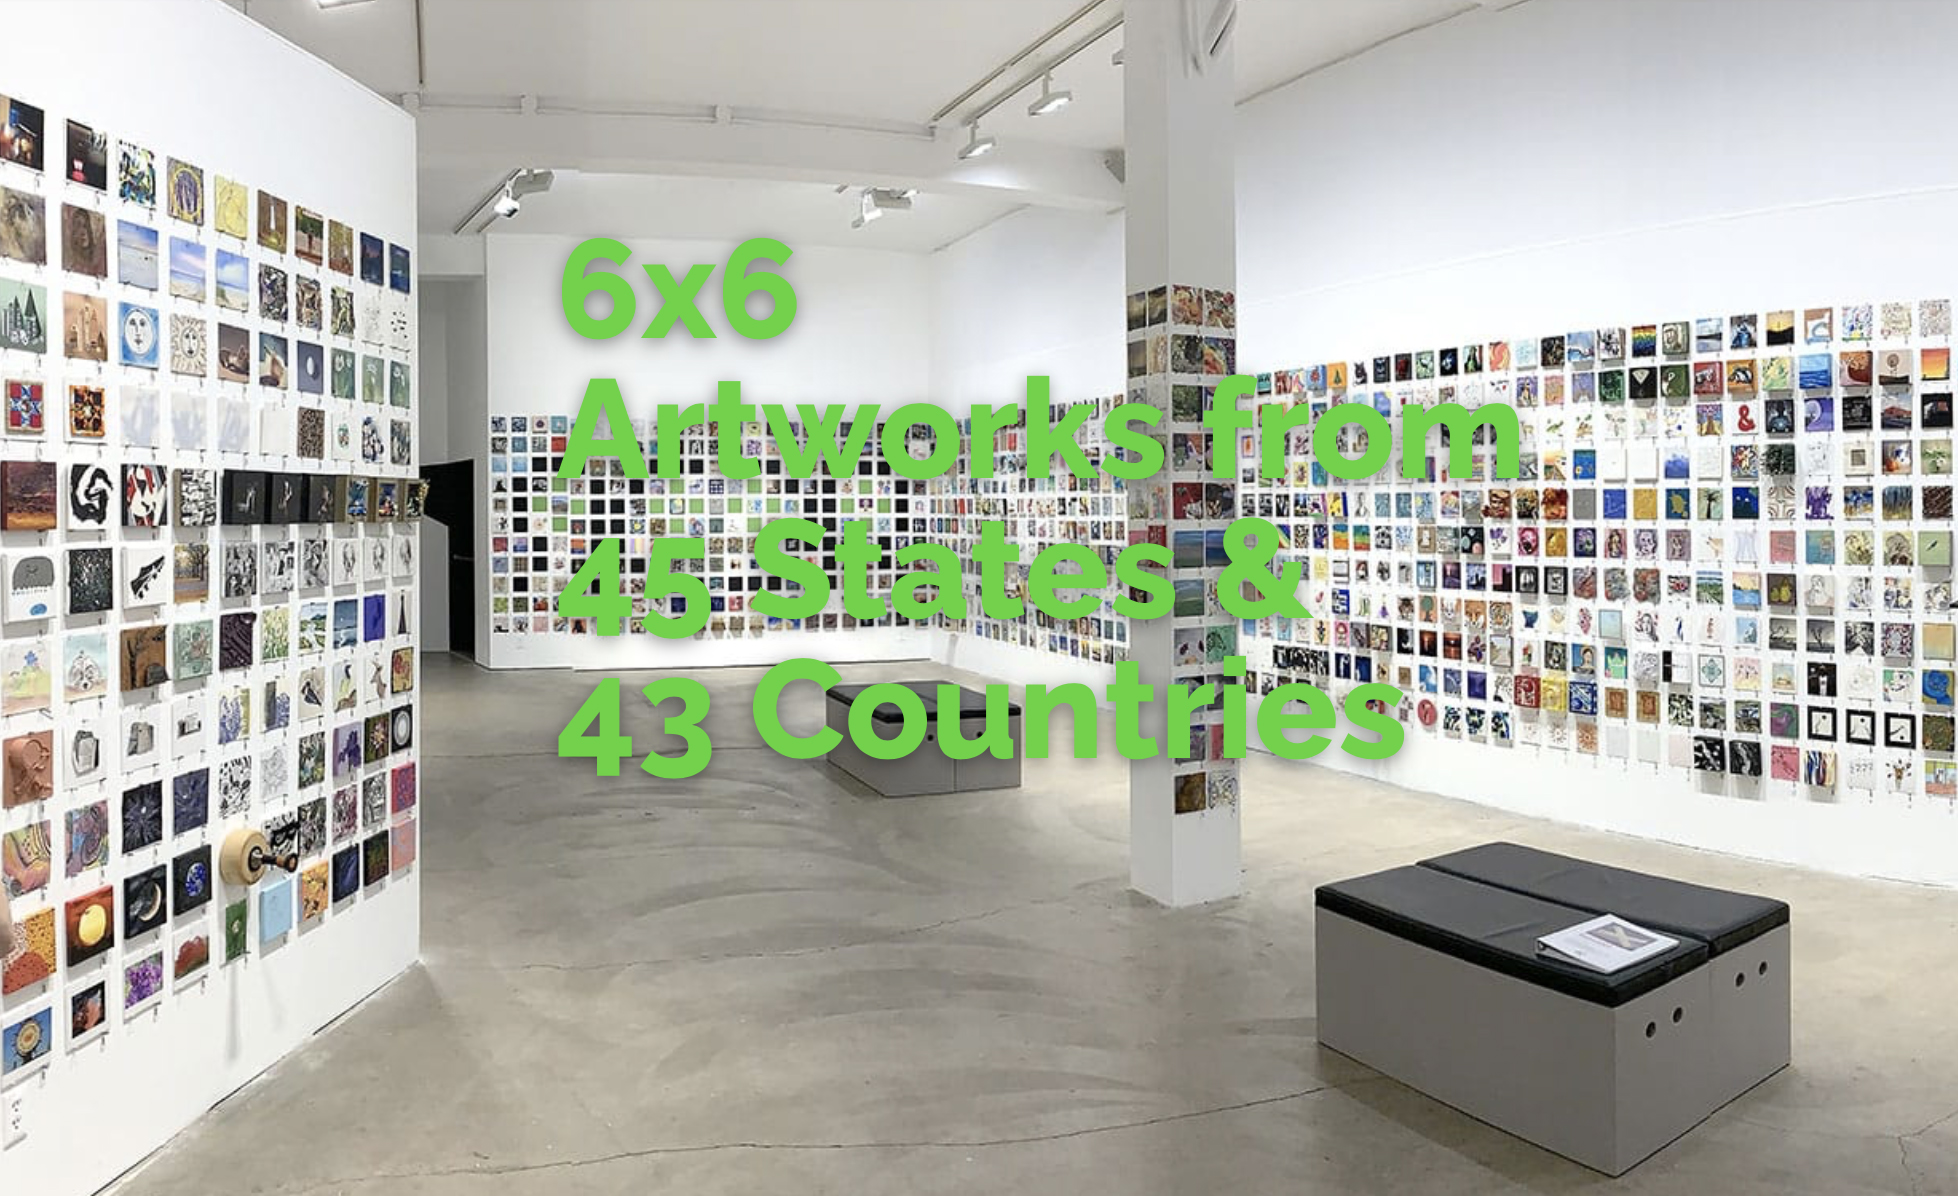 6x6x2021: The International Small Art Phenomenon